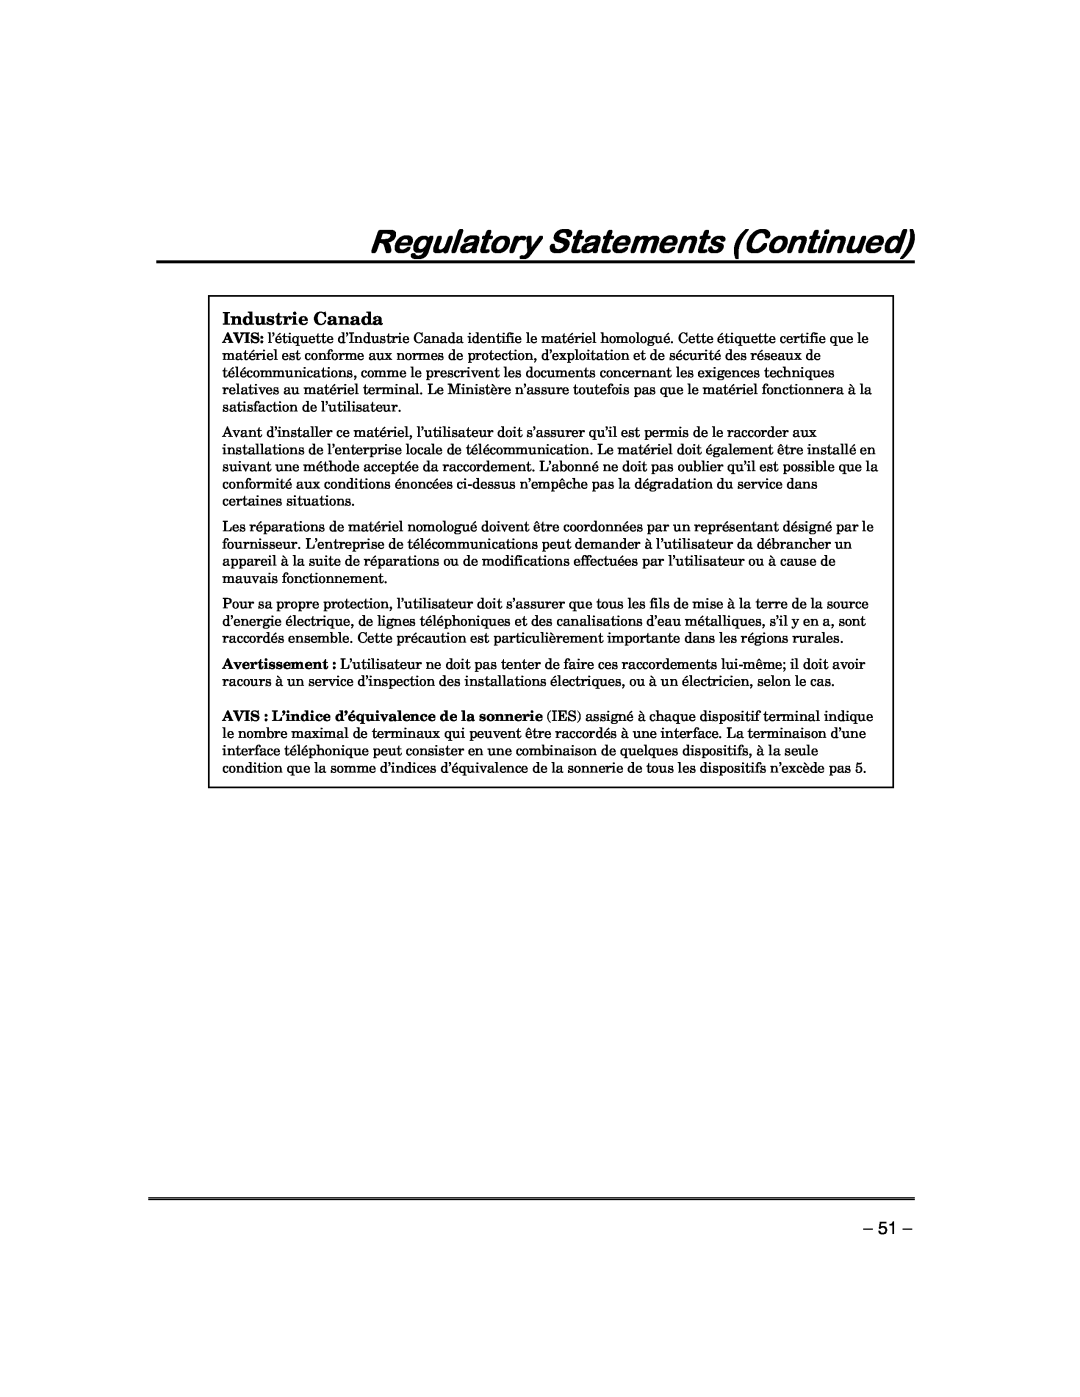 First Alert FA168CPSSIA, FA148CPSIA manual Regulatory Statements Continued, Industrie Canada 